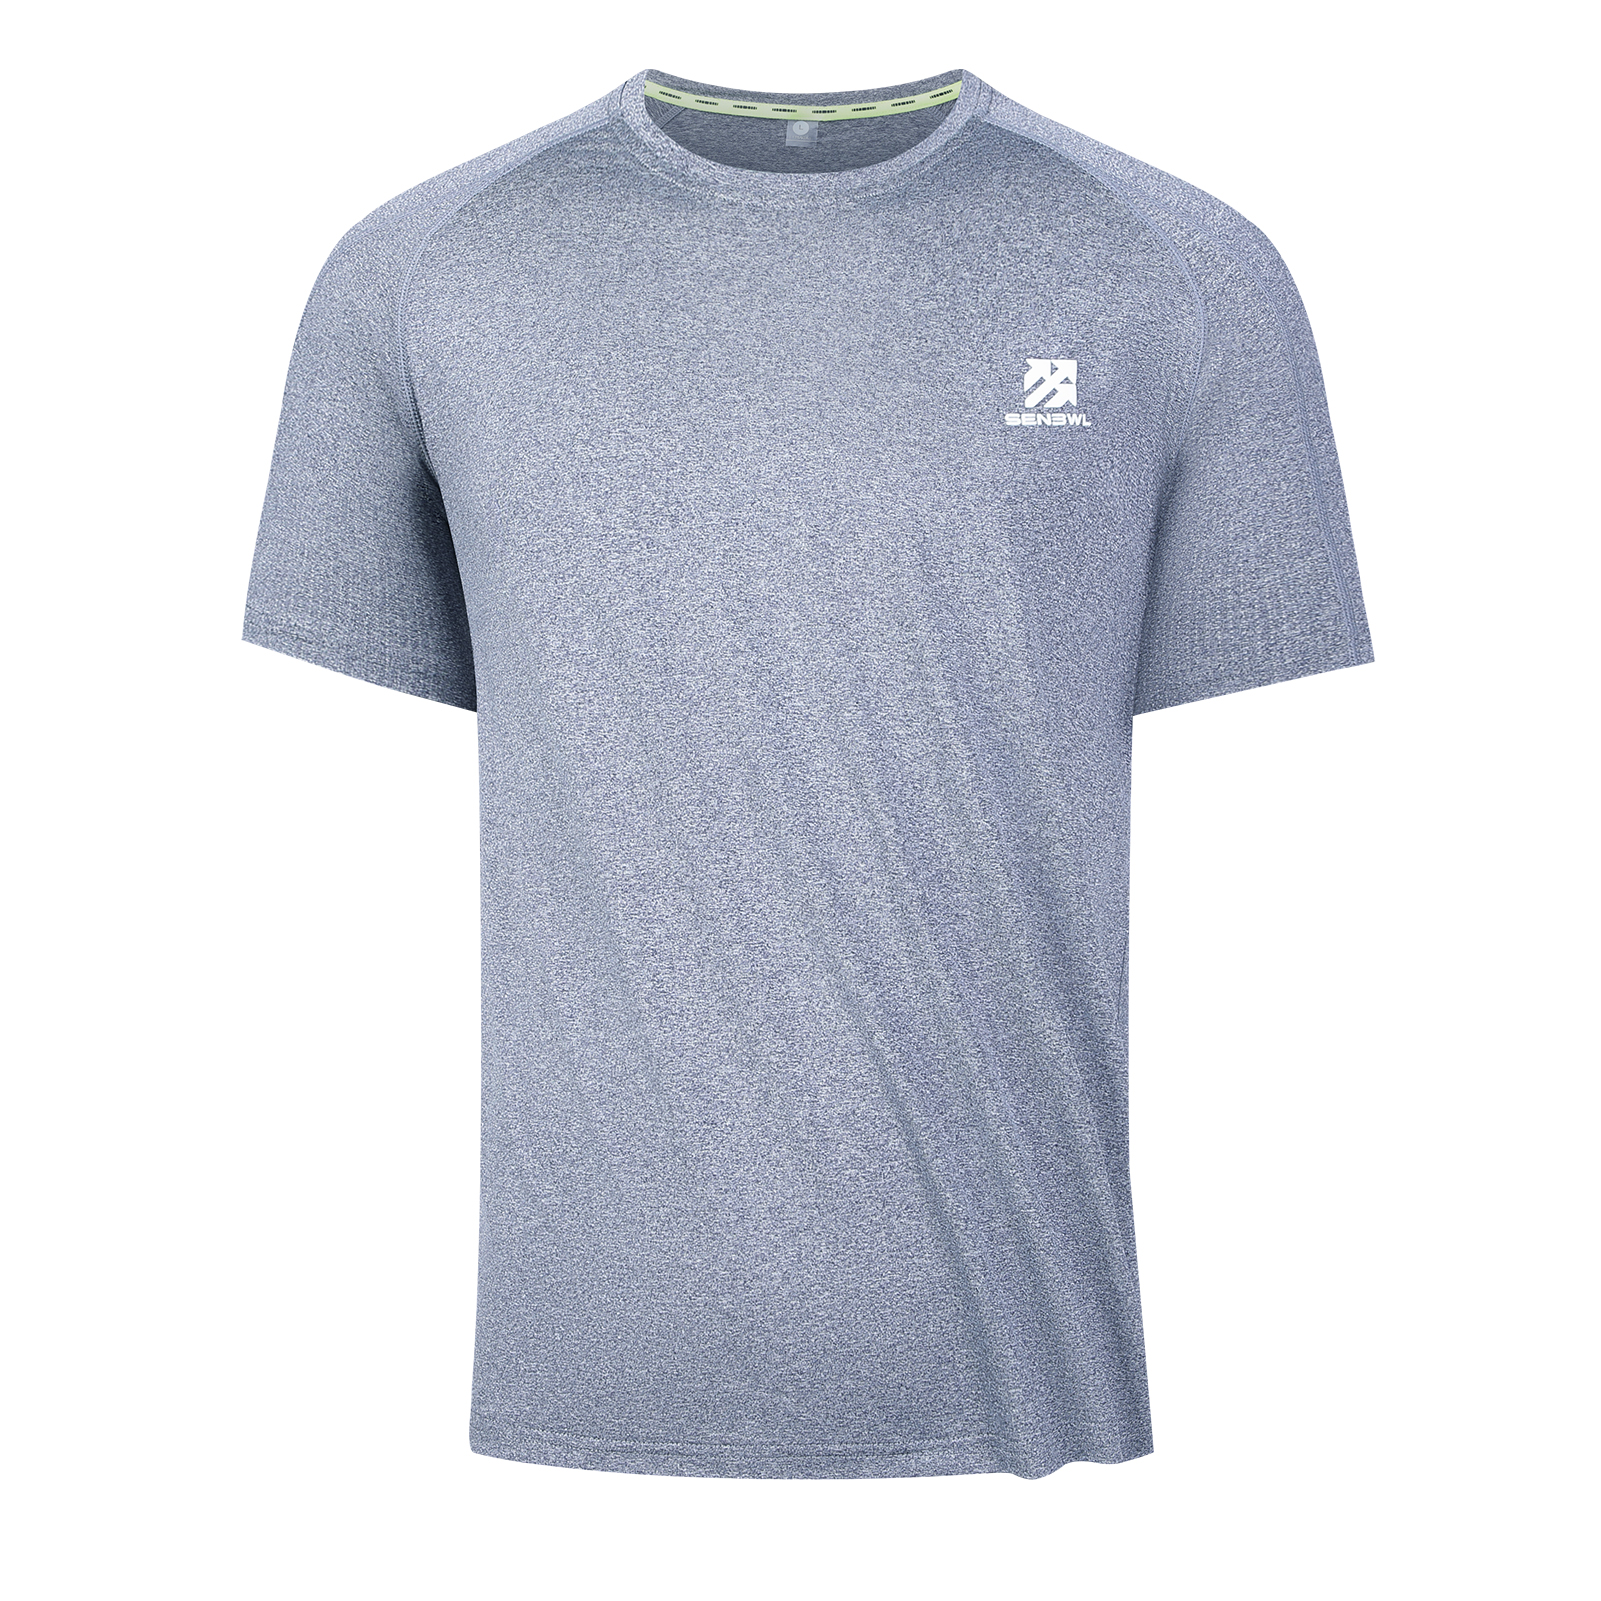 Mens Short Sleeve T-Shirts-Senbwl Sports